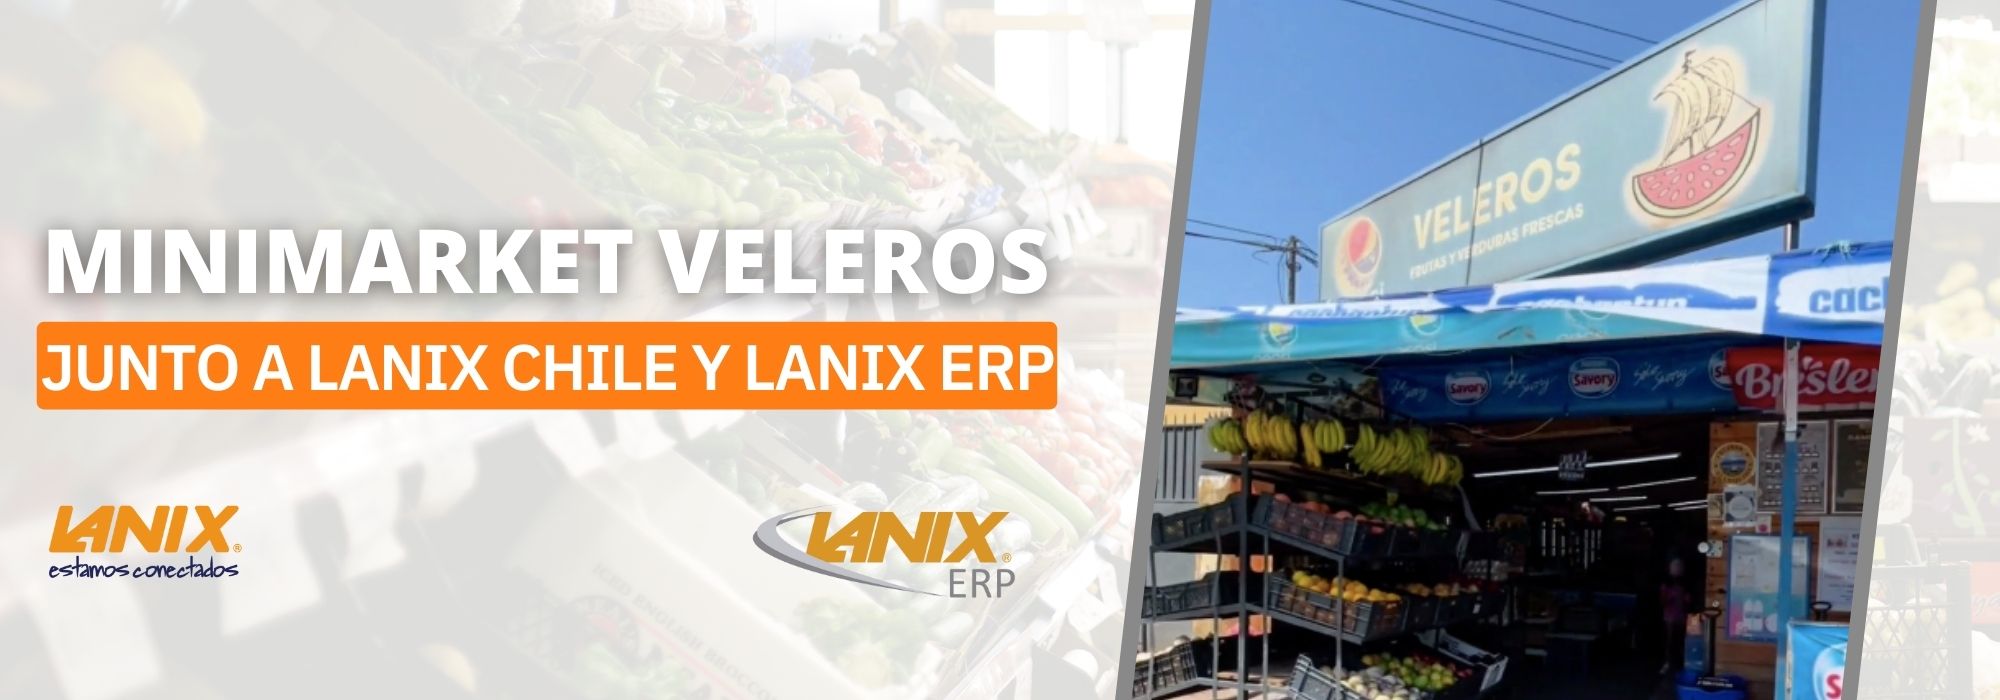 Lanix ERP